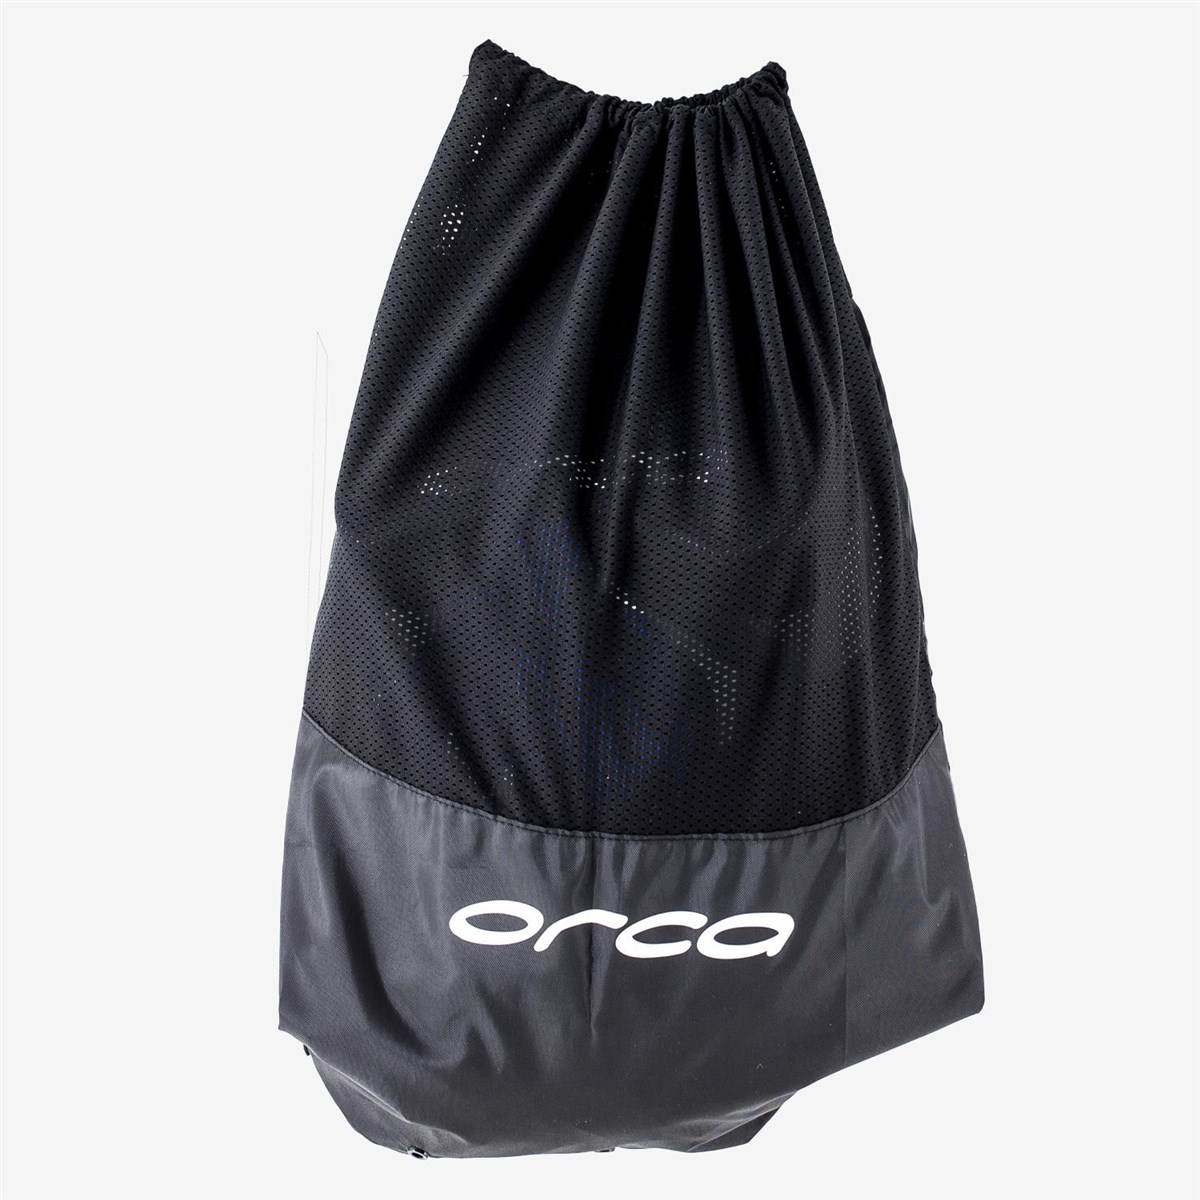 Orca Mesh Swim Bag product image